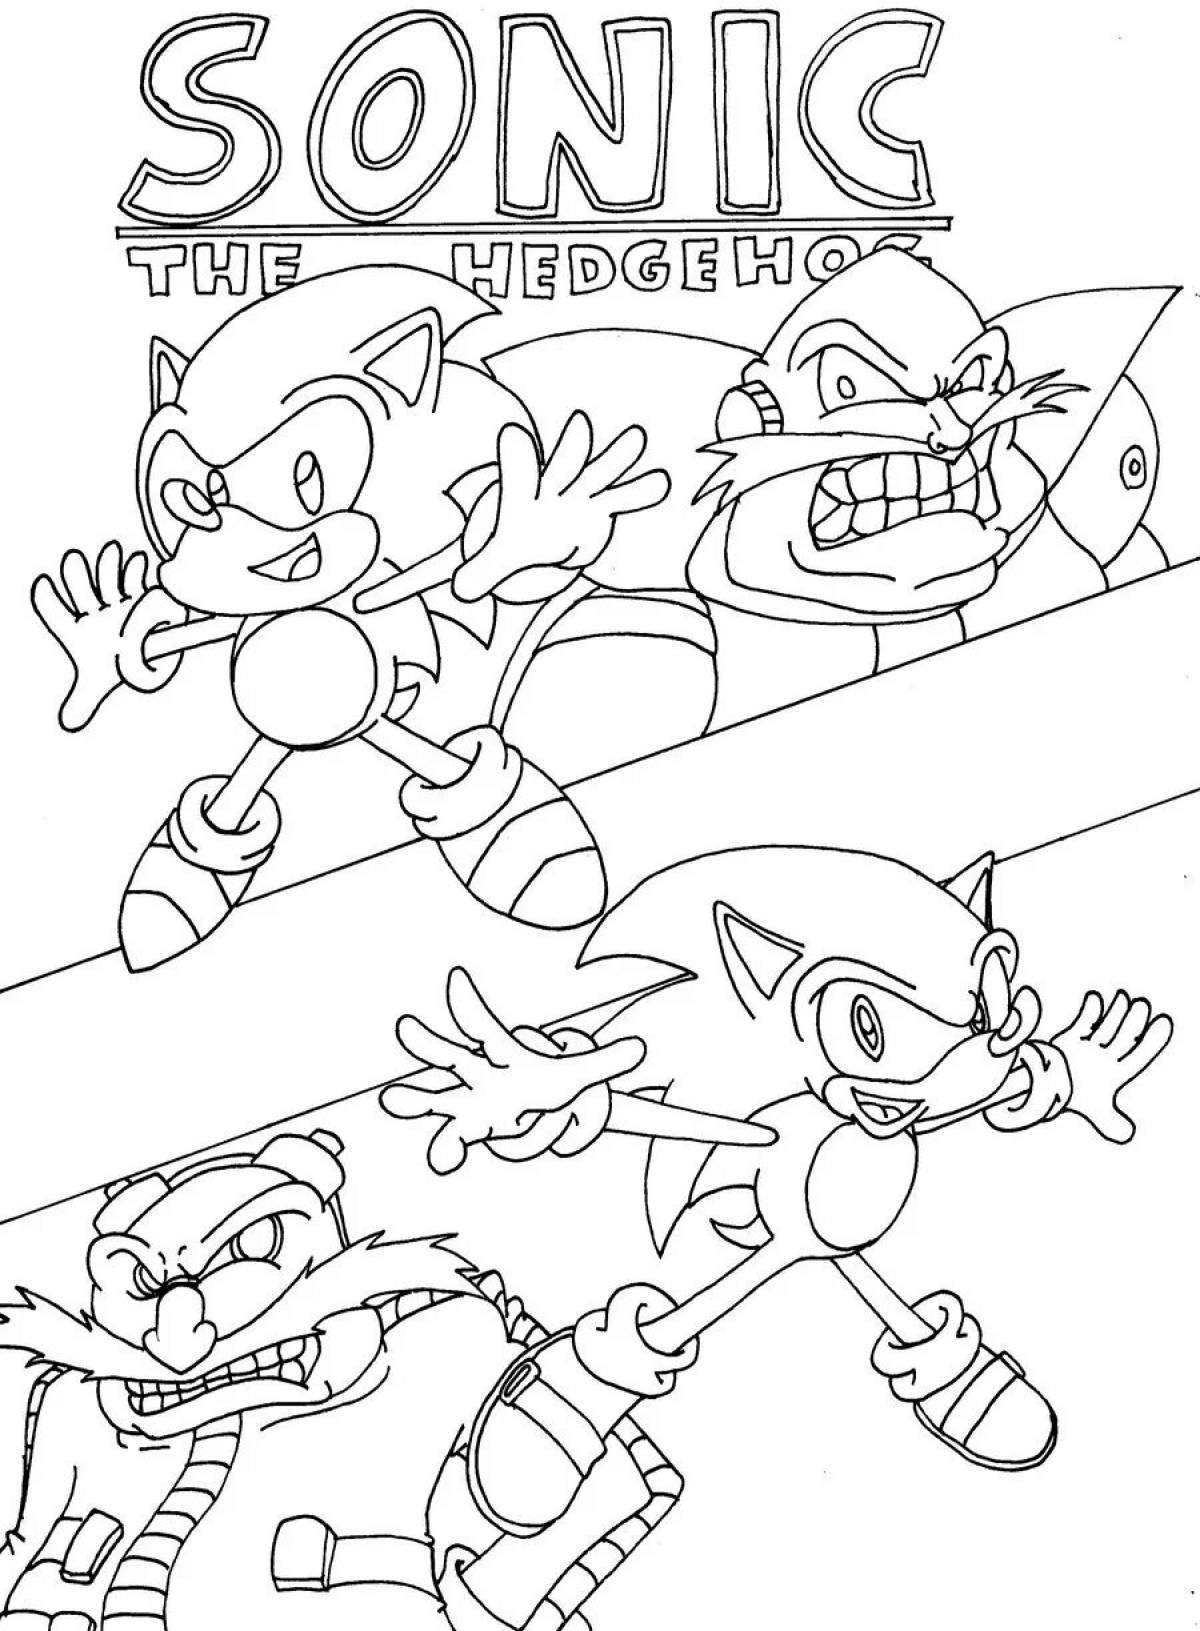 Sonic team #4